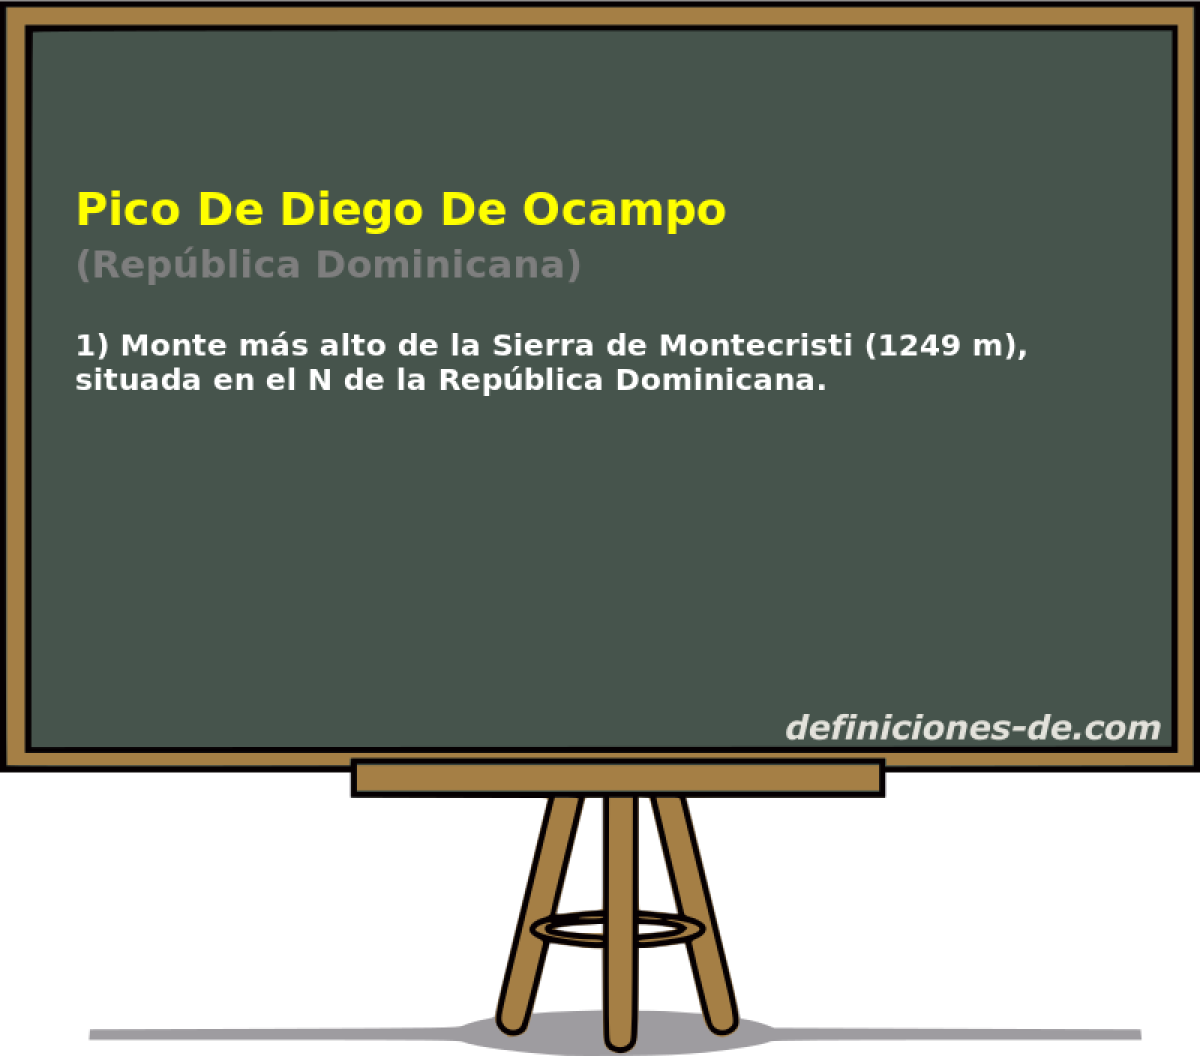 Pico De Diego De Ocampo (Repblica Dominicana)